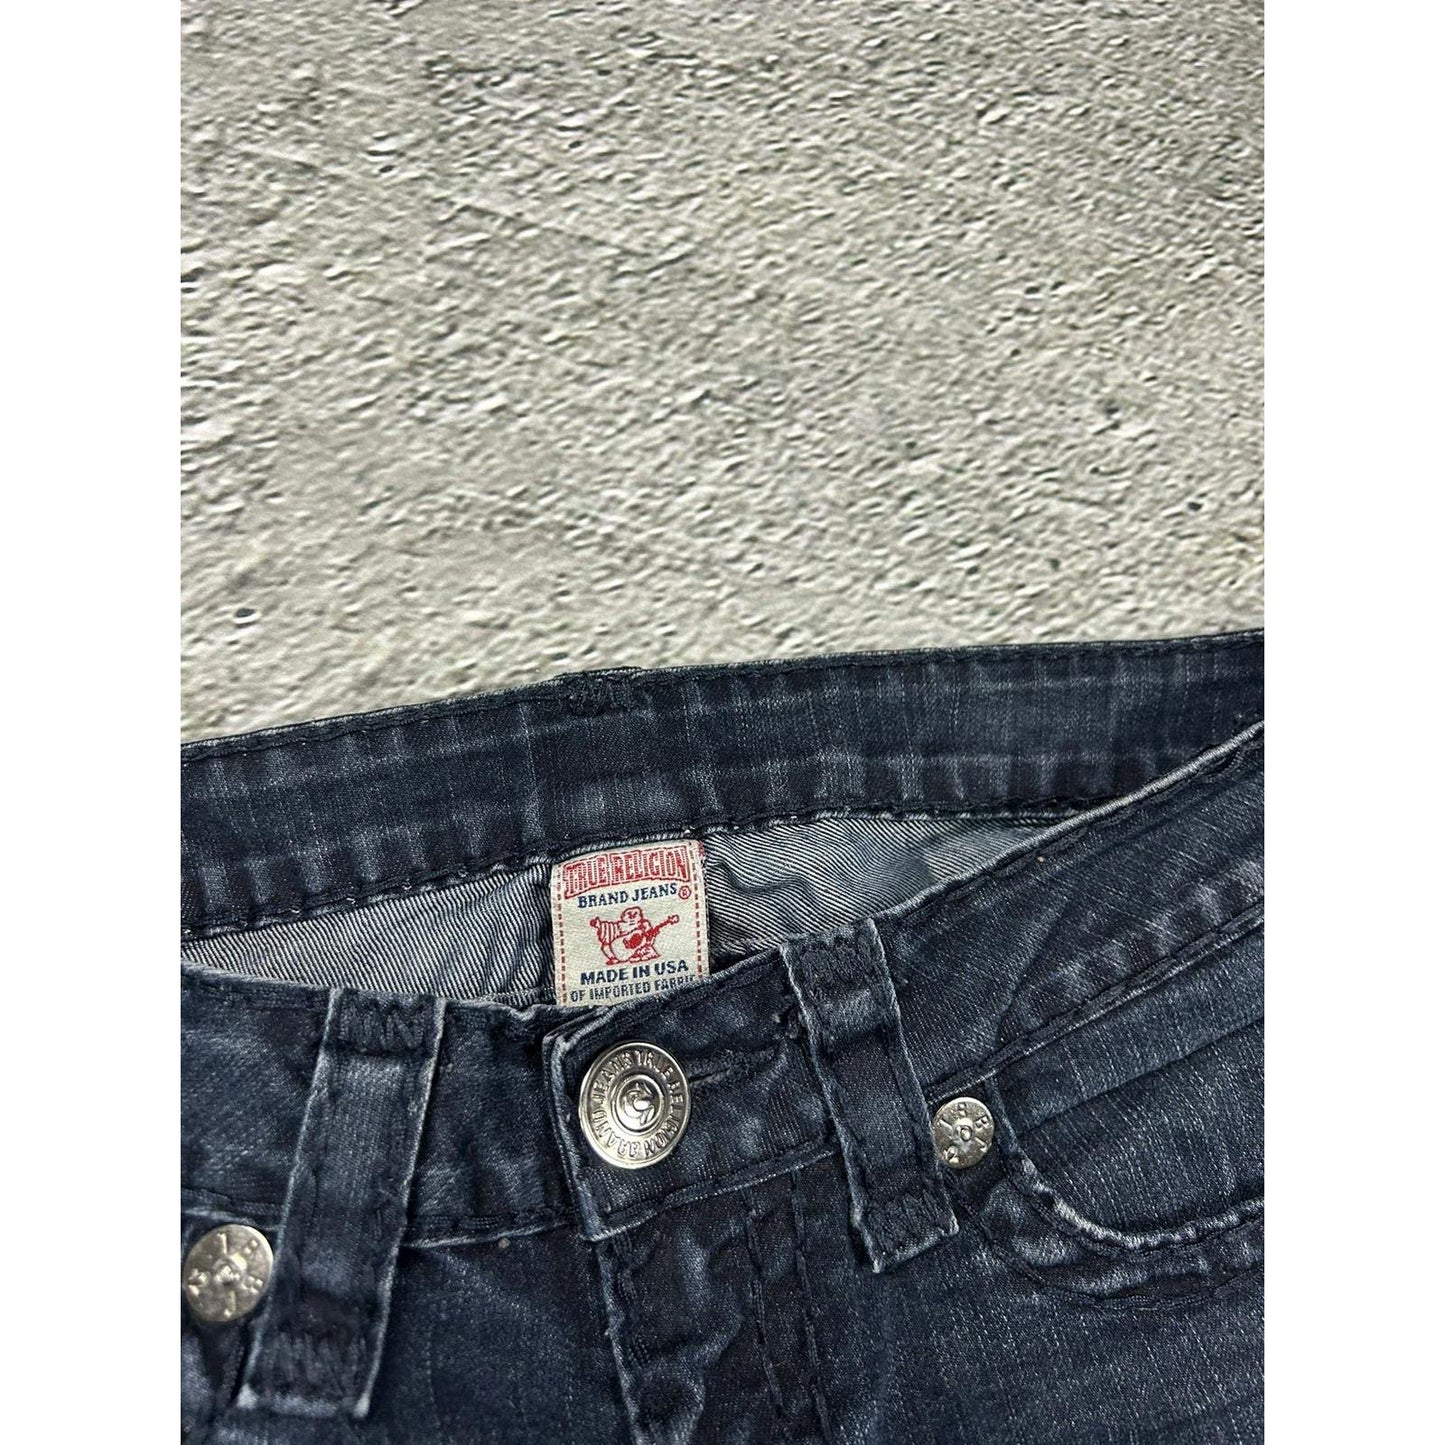 True Religion slim jeans navy black thick stitching Y2K